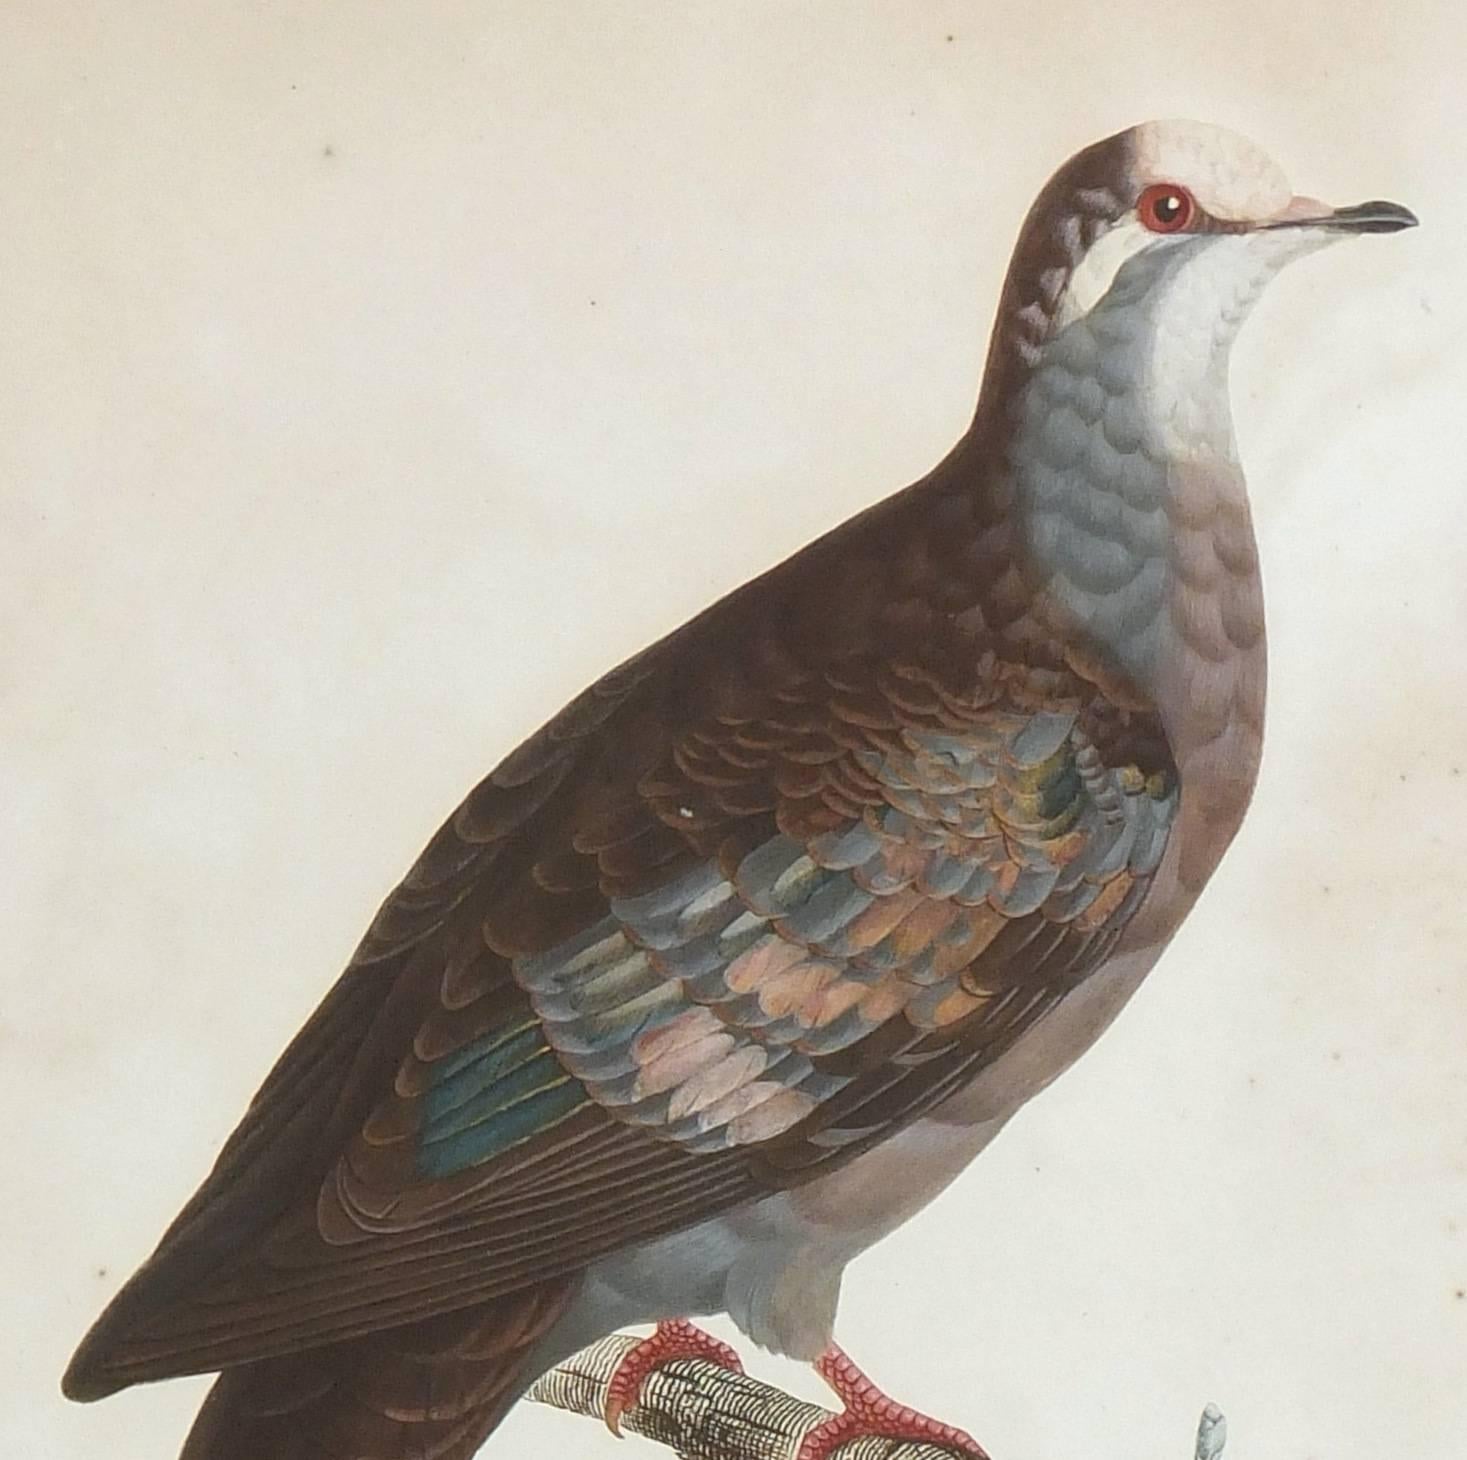 Vintage French Aquatint - Temminick's Birds - Print by Coenraad Jacob Temminick